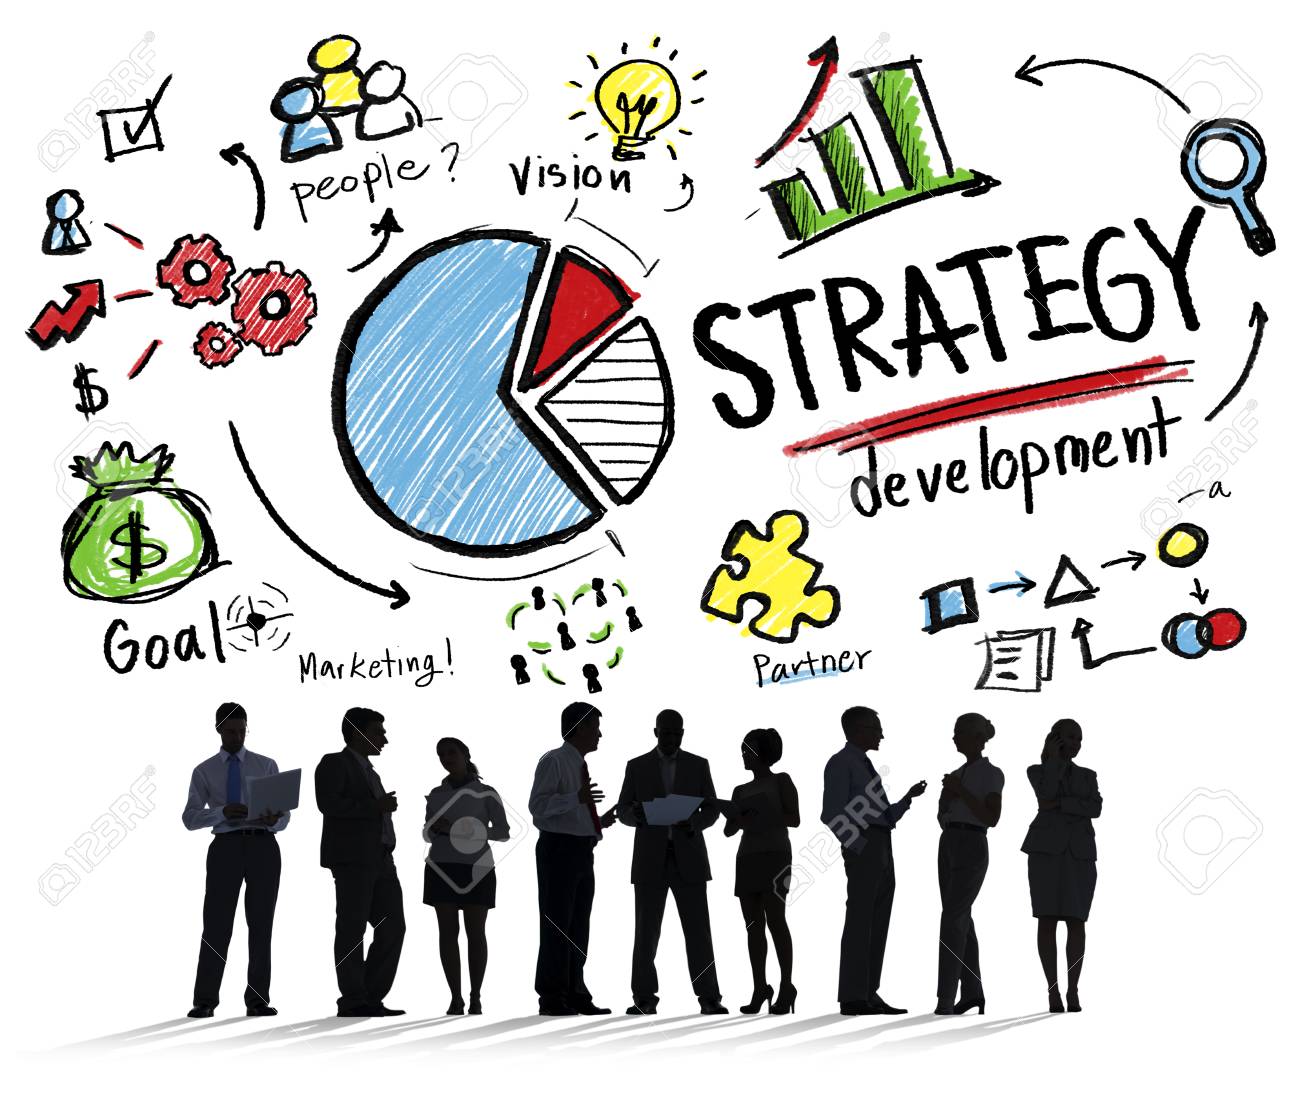 Professional Strategic Planning, Development & Implementation